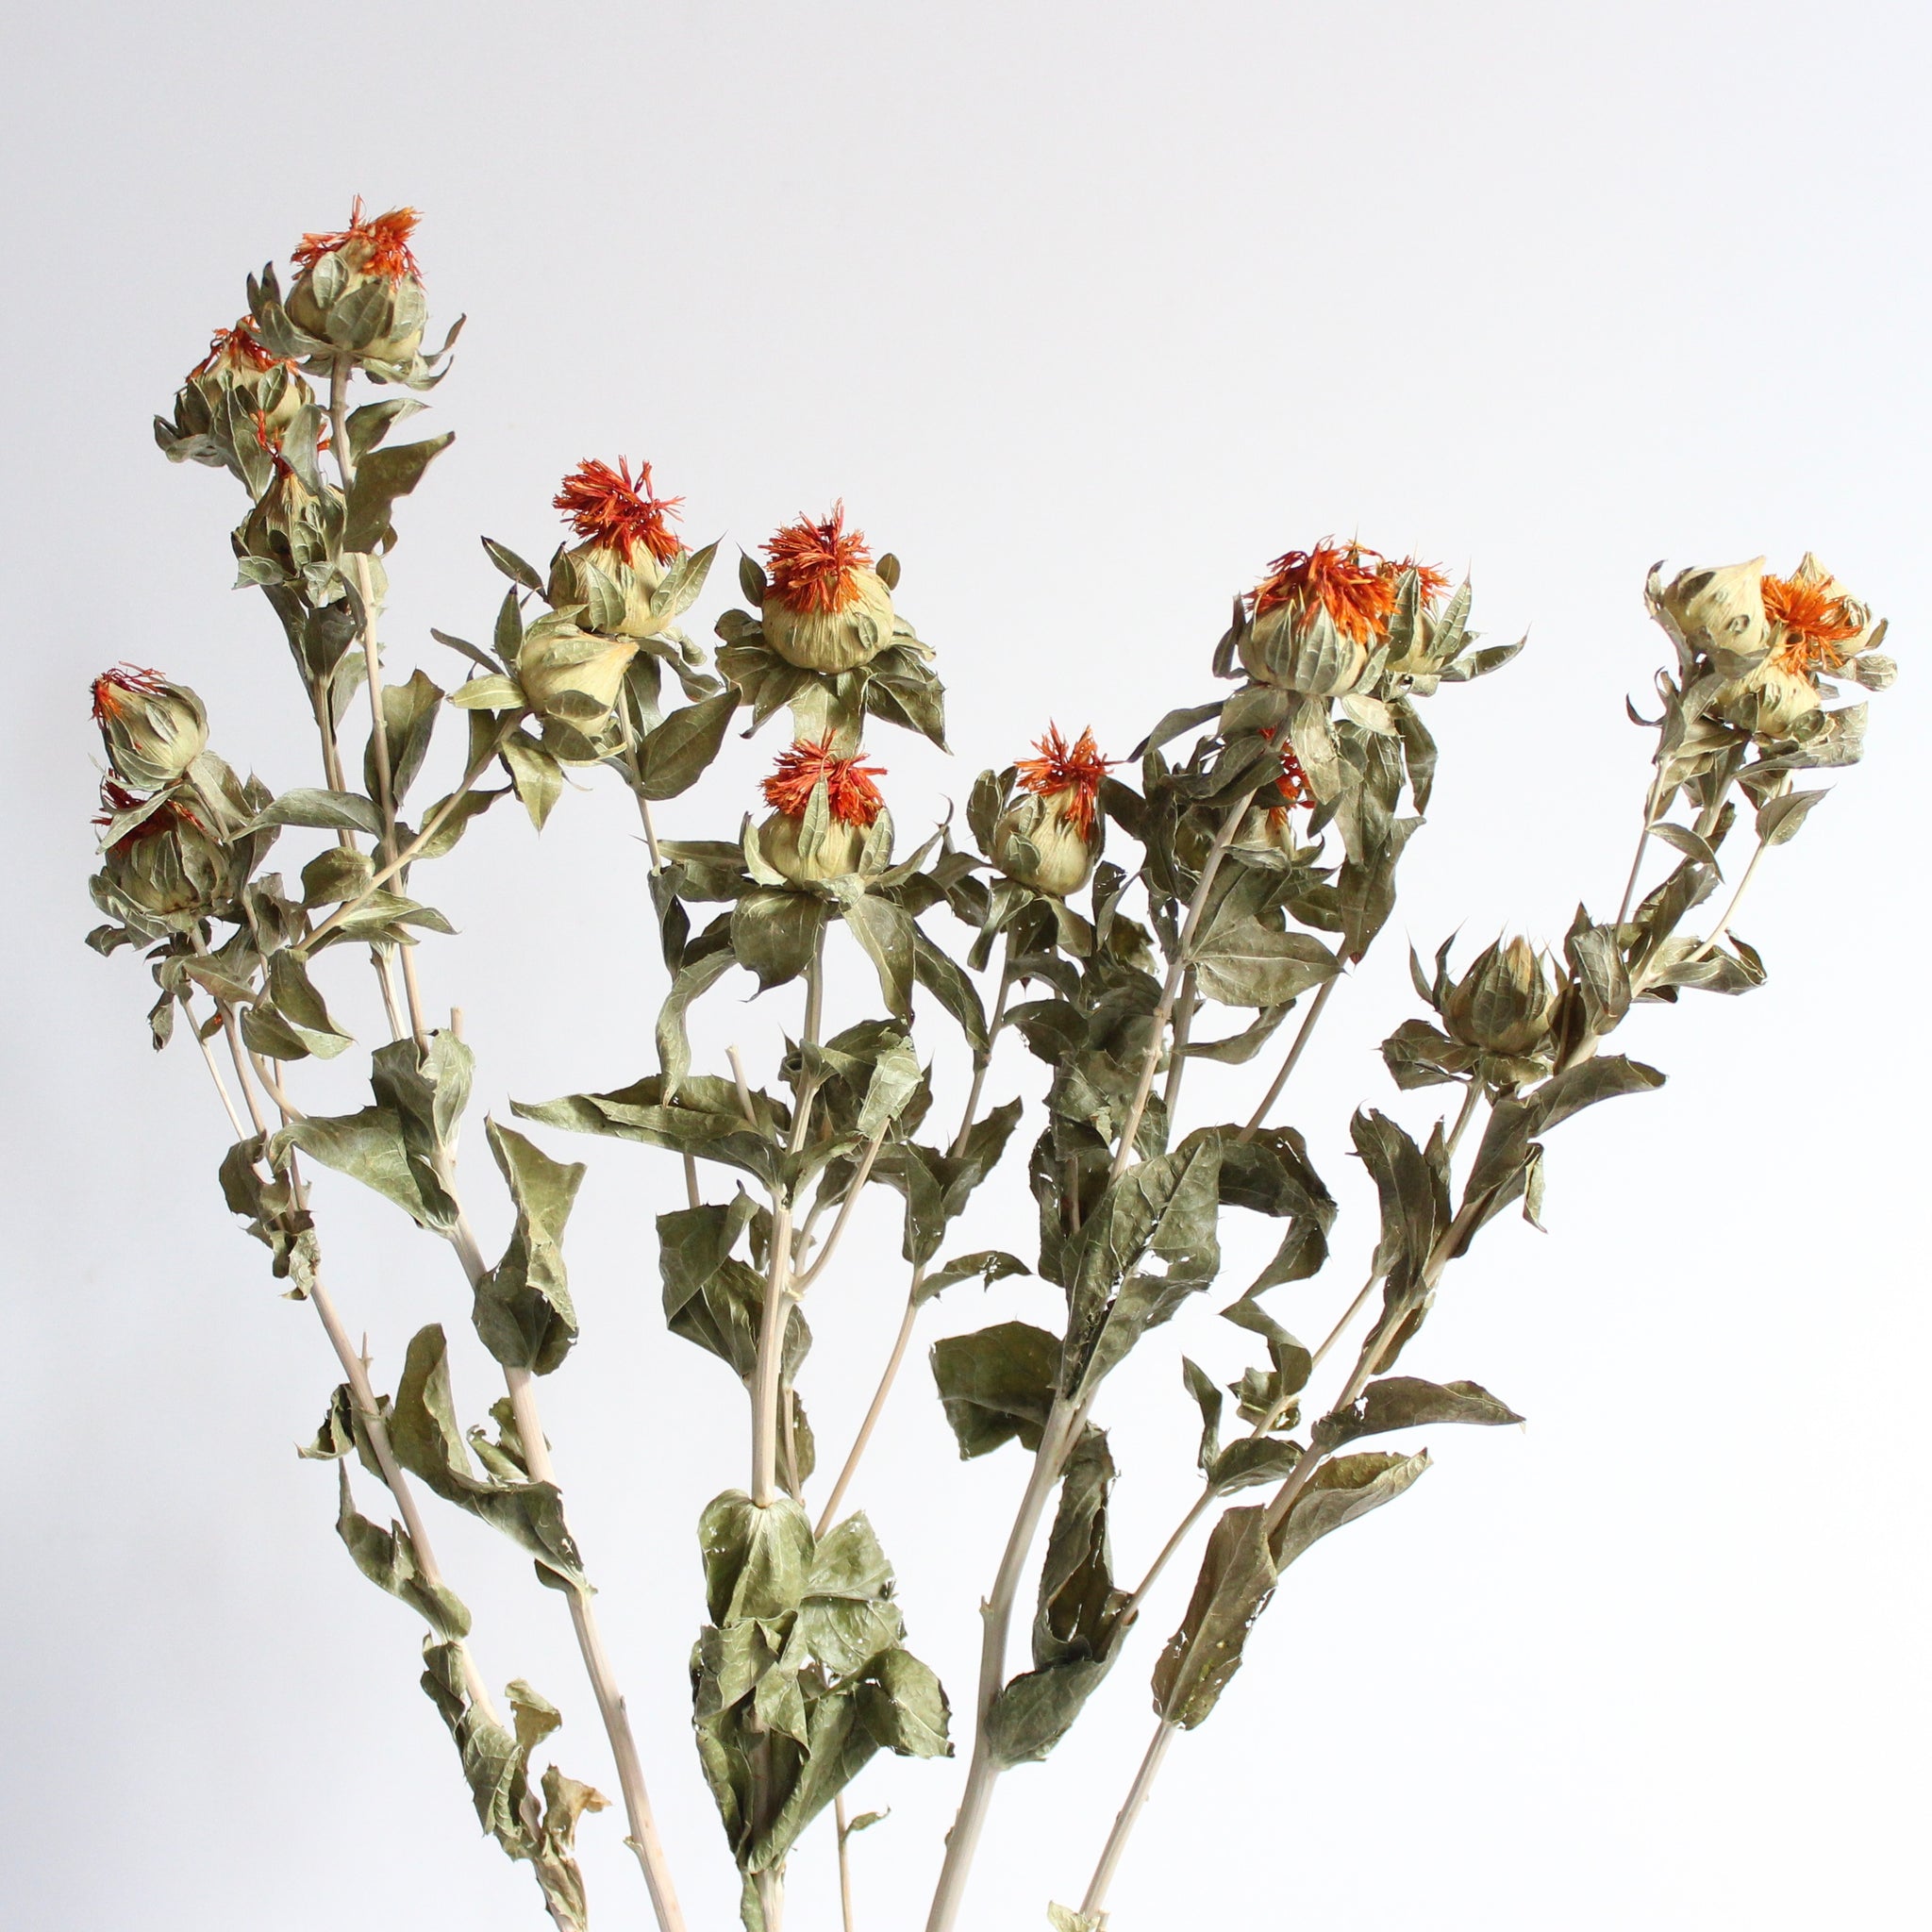 Safflower Petals - Carthamus Tinctorius Dried Loose Petals from 100% Nature (2 oz)